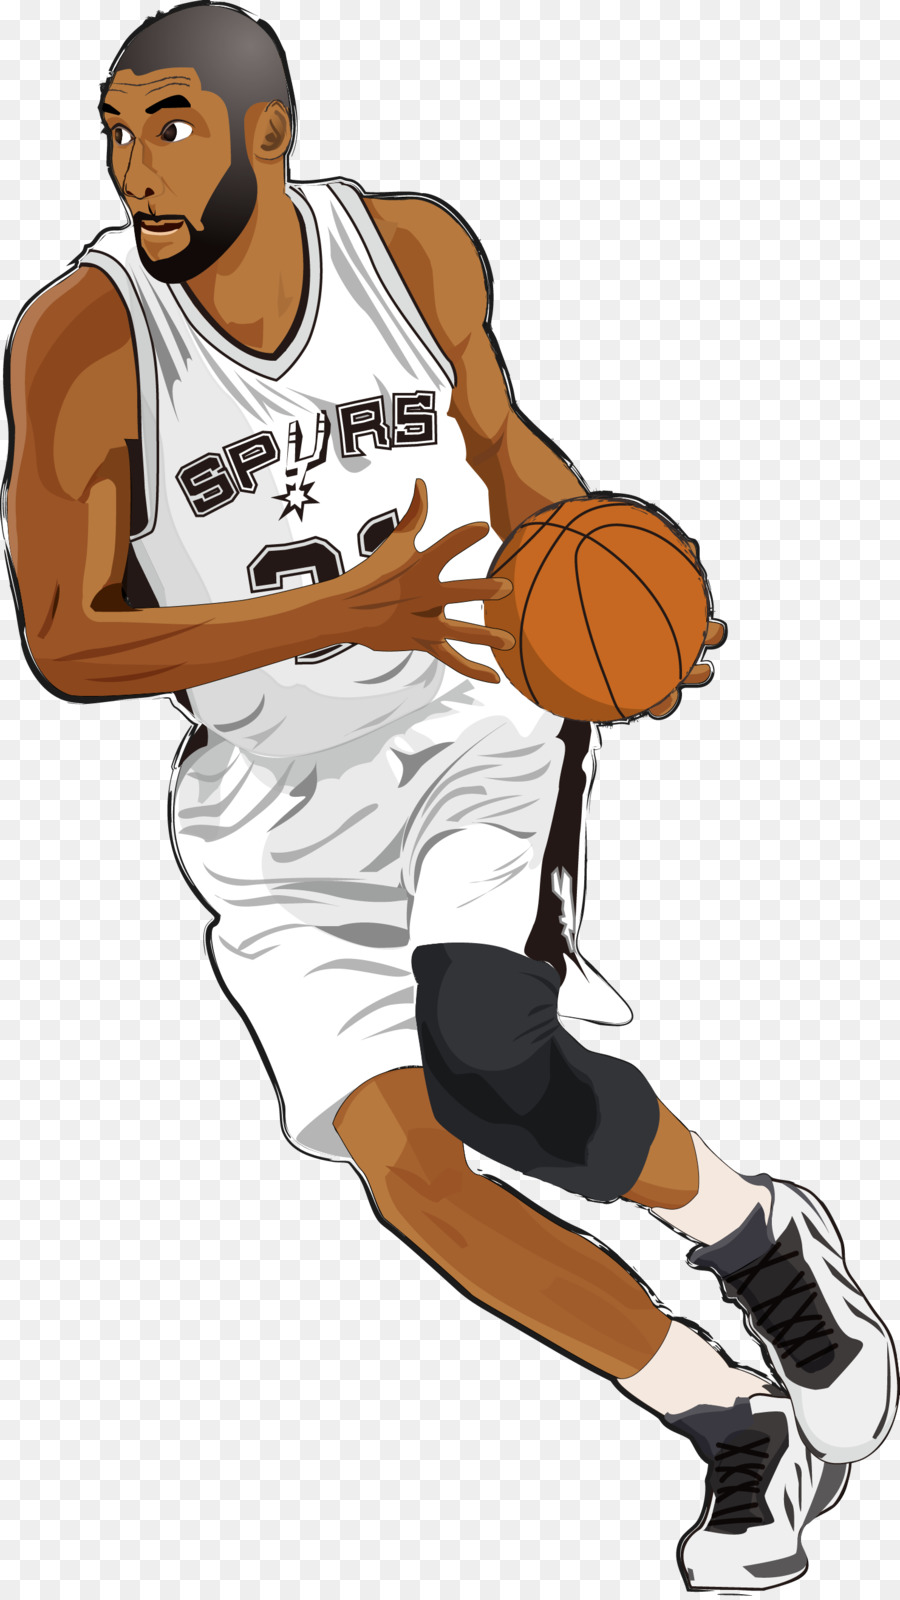 Basket Tim Duncan San Antonio Spurs Illustrazione Attore - colpire